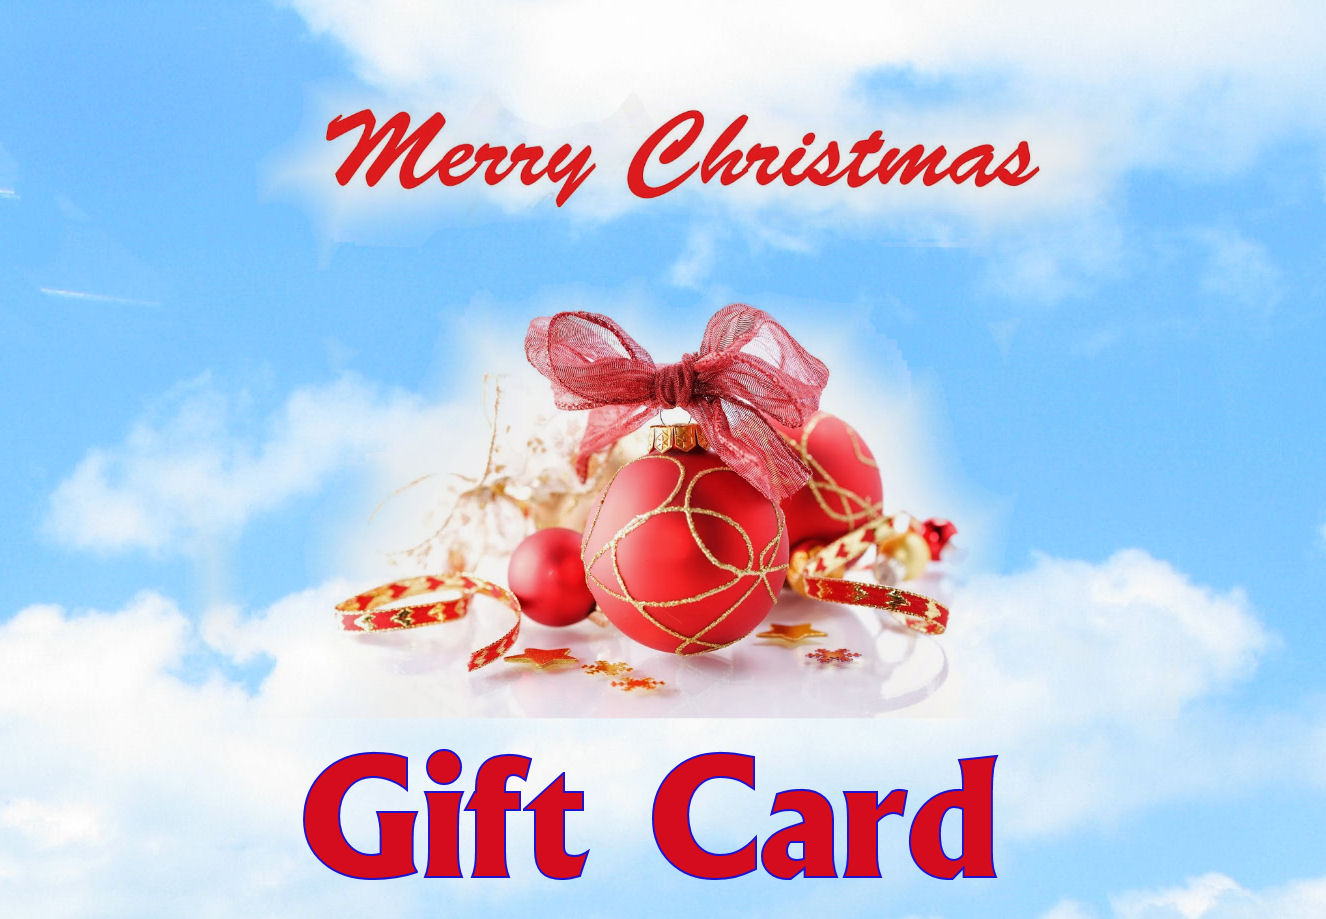 Merry Christmas Digital Gift Card Mystic Access